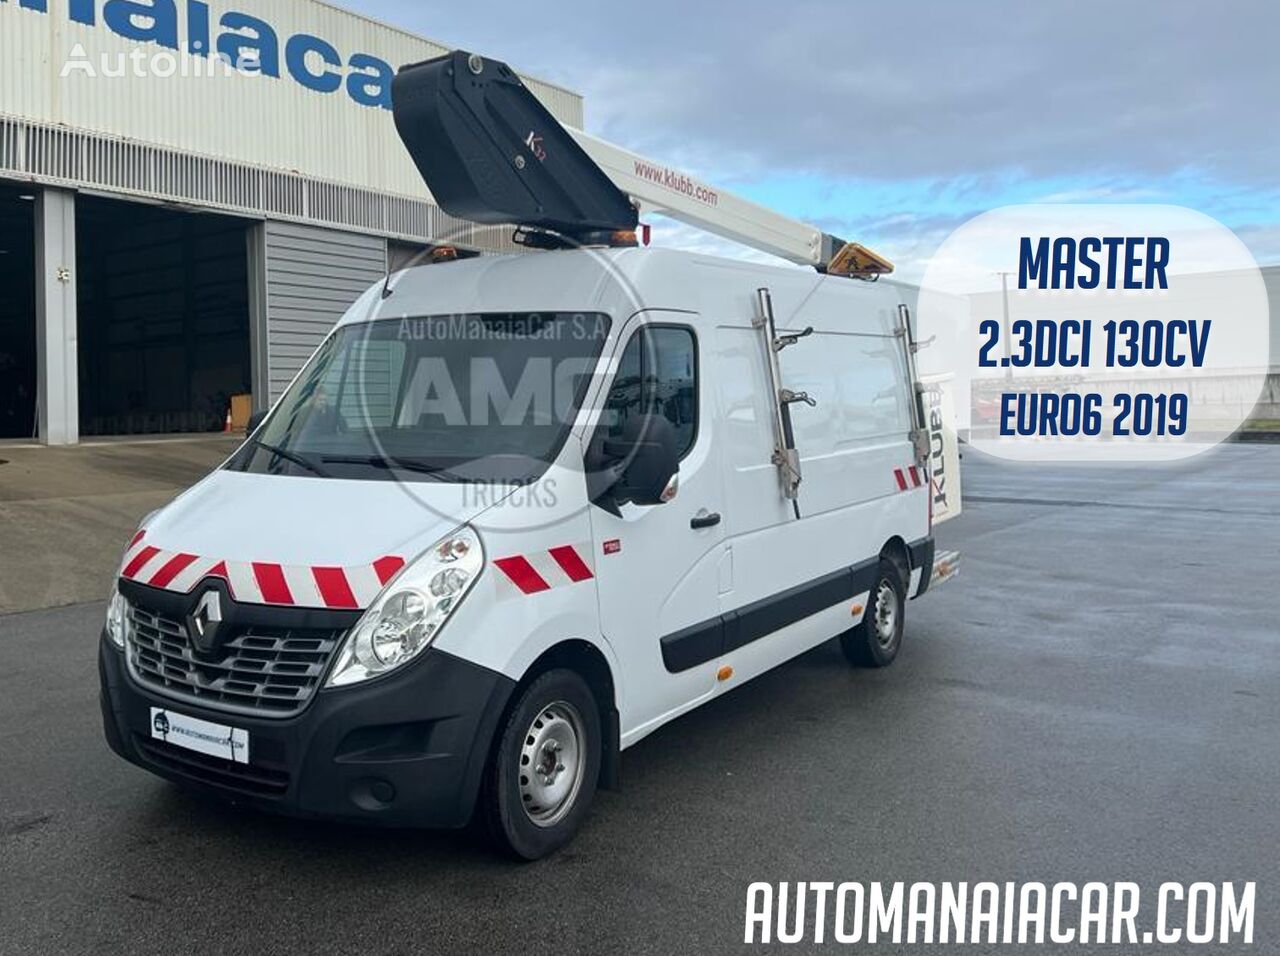 Renault MASTER 2.3DCi 130cv Euro6 2019 C/ CESTO ELEVATÓRIO kamion furgon < 3.5t